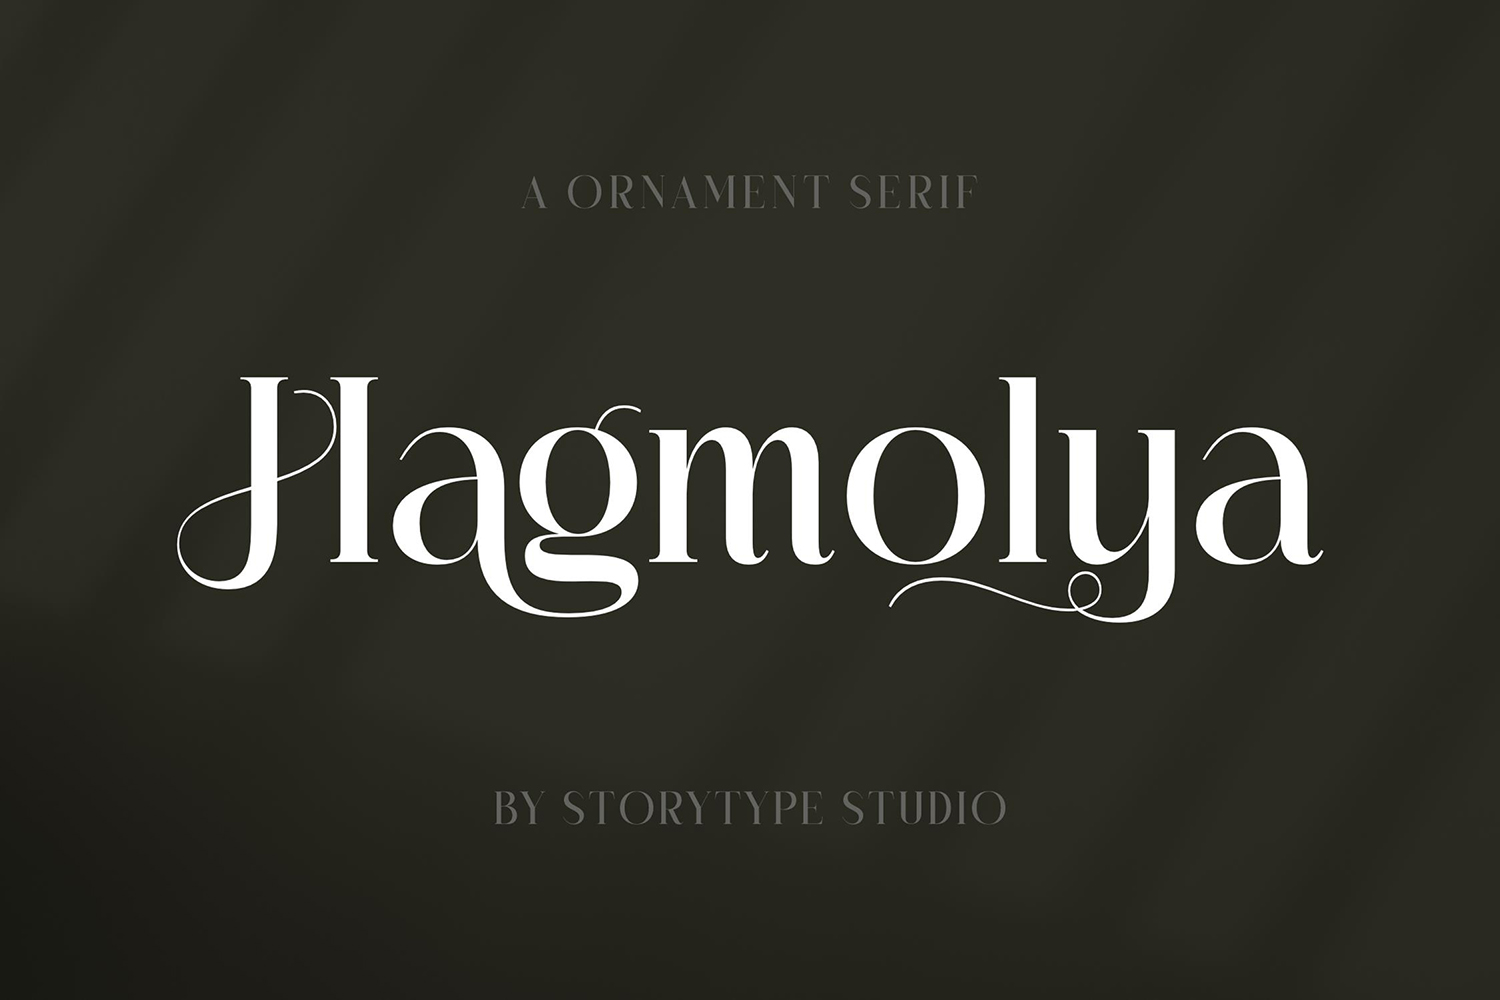 Hagmolya Free Font